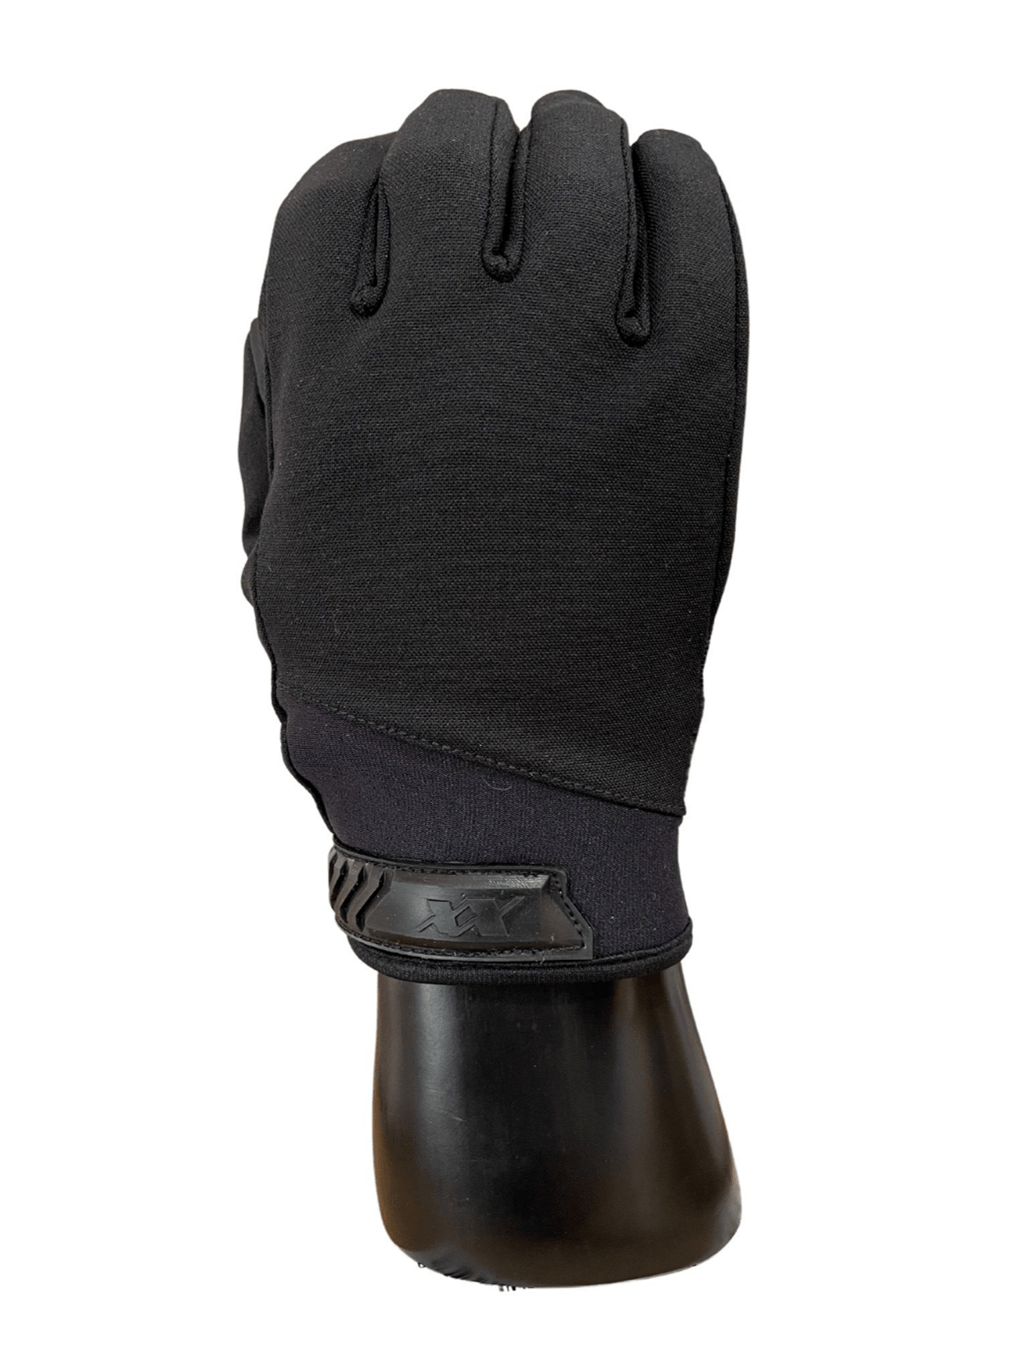 Molle Shop Australia 221B Tactical Responder Gloves Elite - Full Dexterity - Level 5 Cut Resistant & Fluid Resistant 221B Tactical Responder Gloves Elite - Full Dexterity - Level 5 Cut Resistant & Fluid Resistant